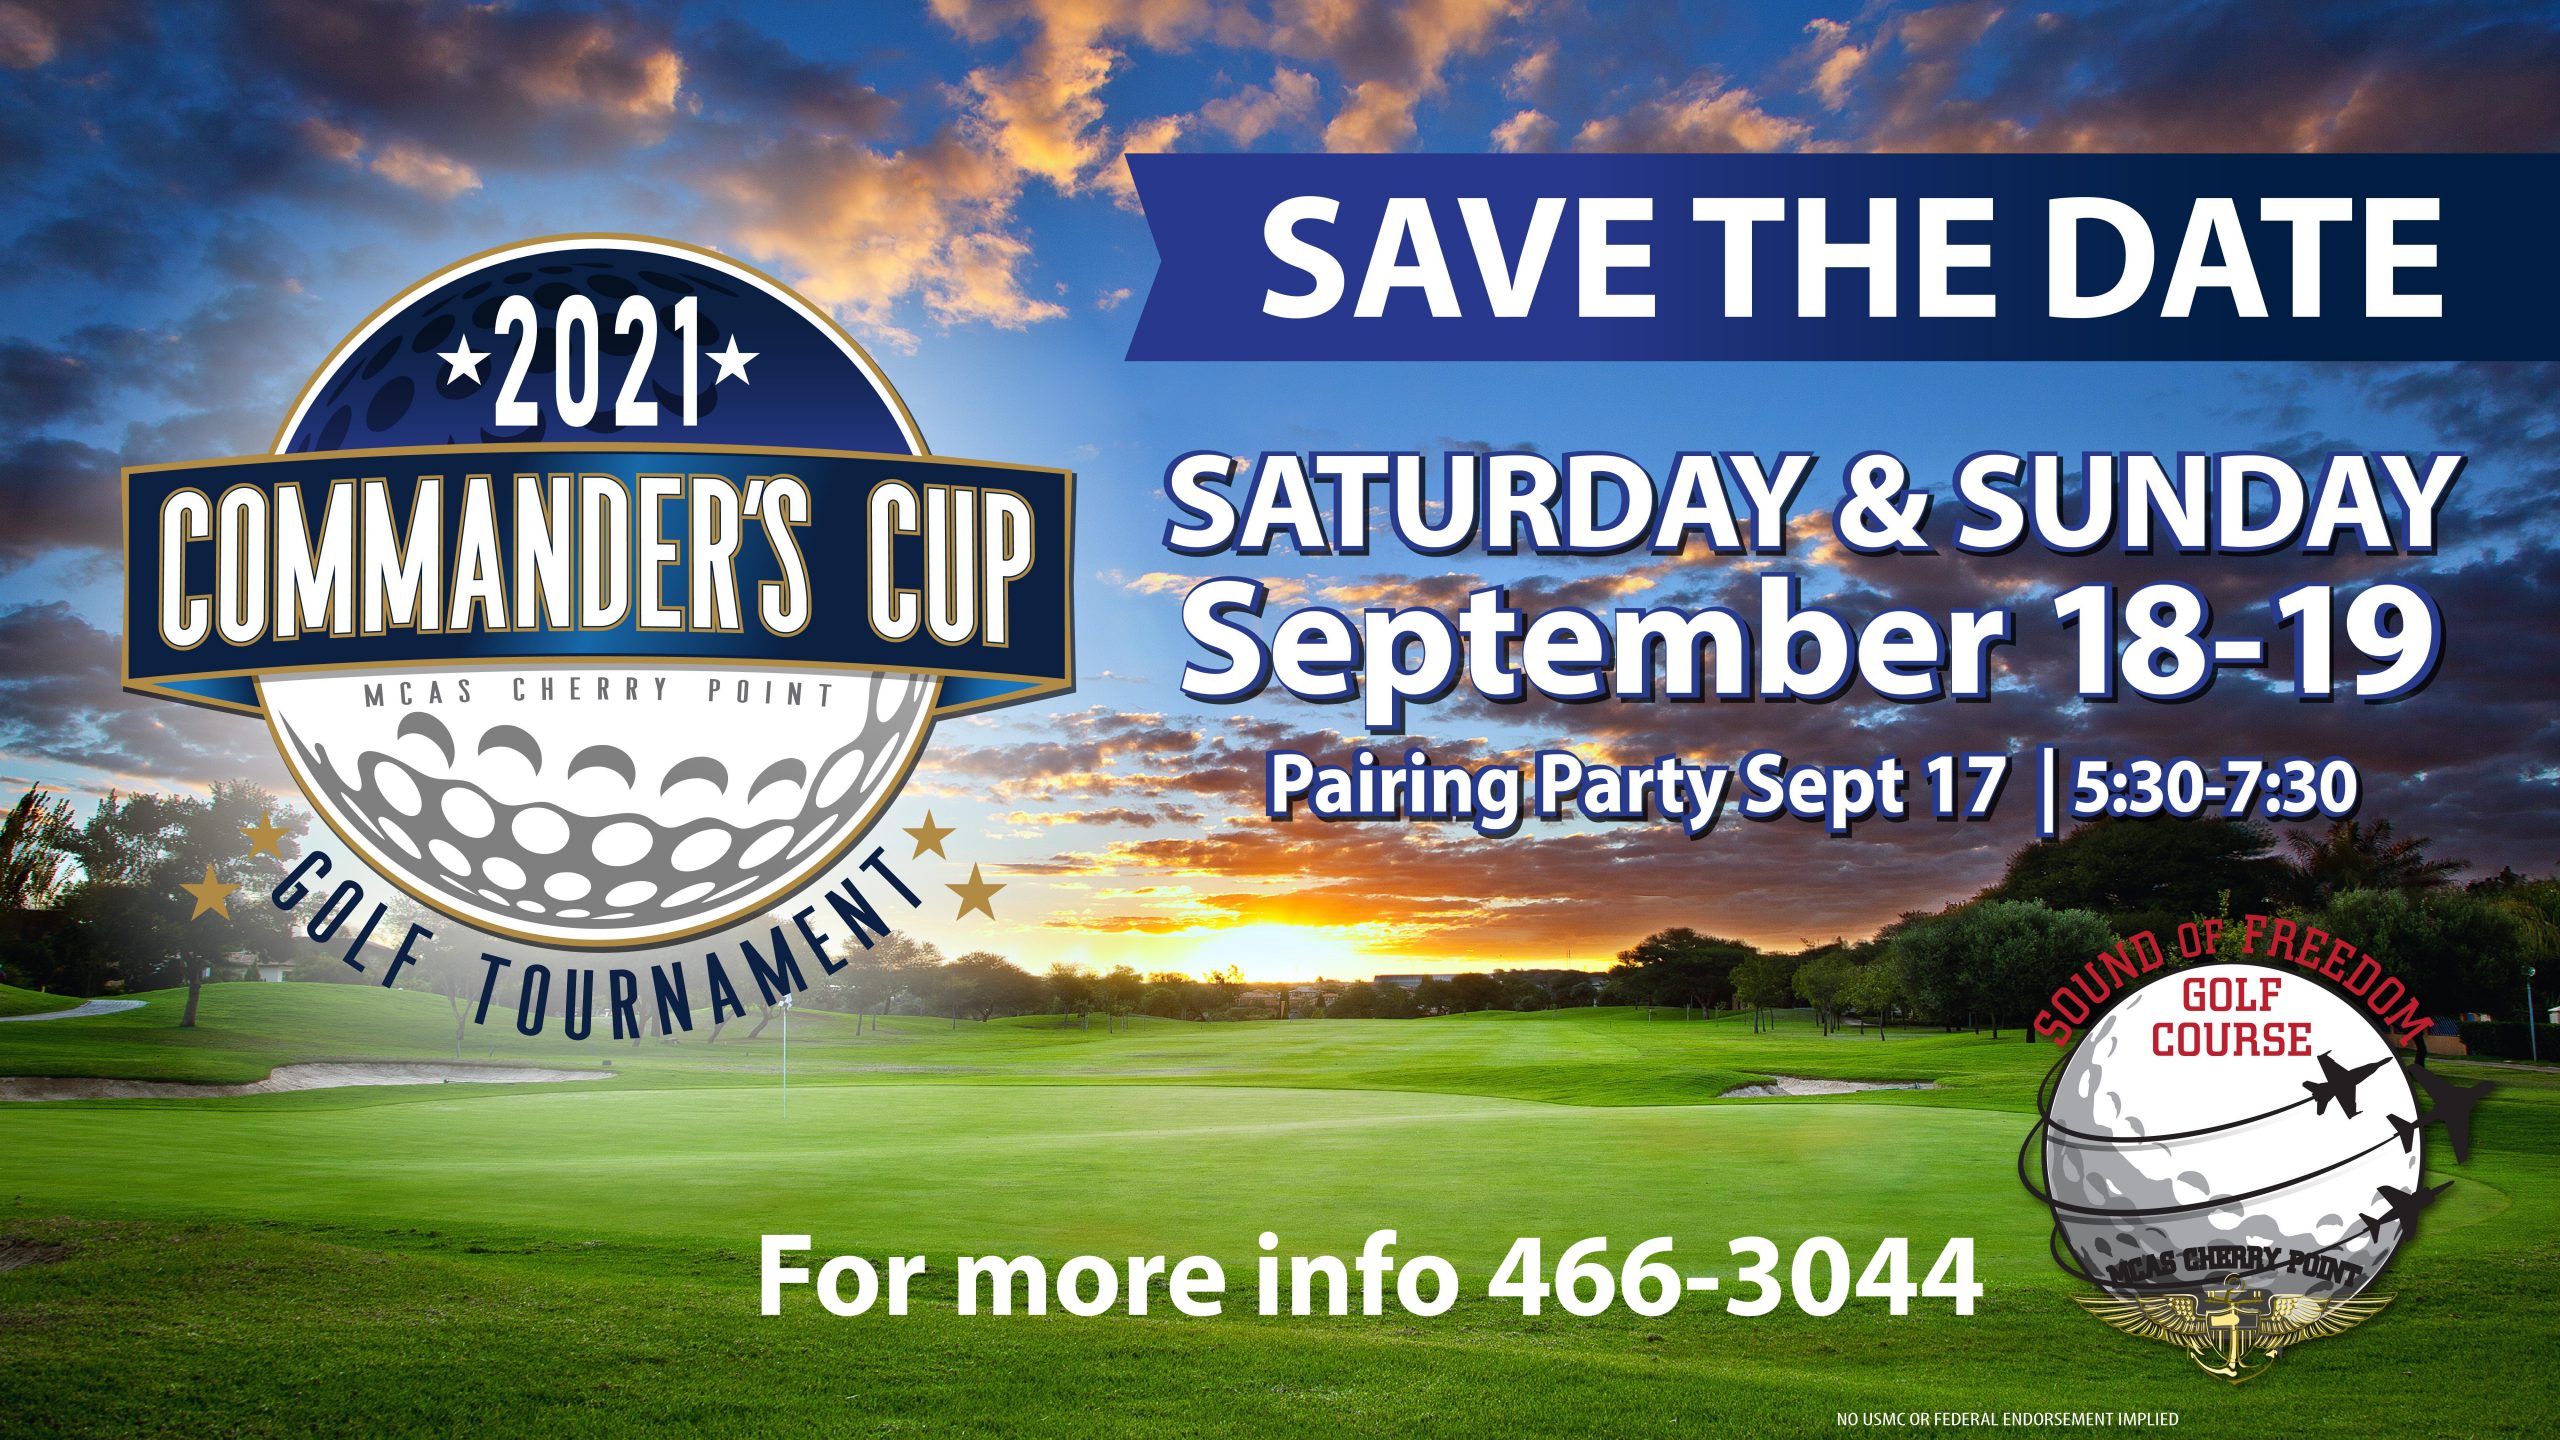 MCAS Cherry Point Commander's Cup Golf Tournament 2021